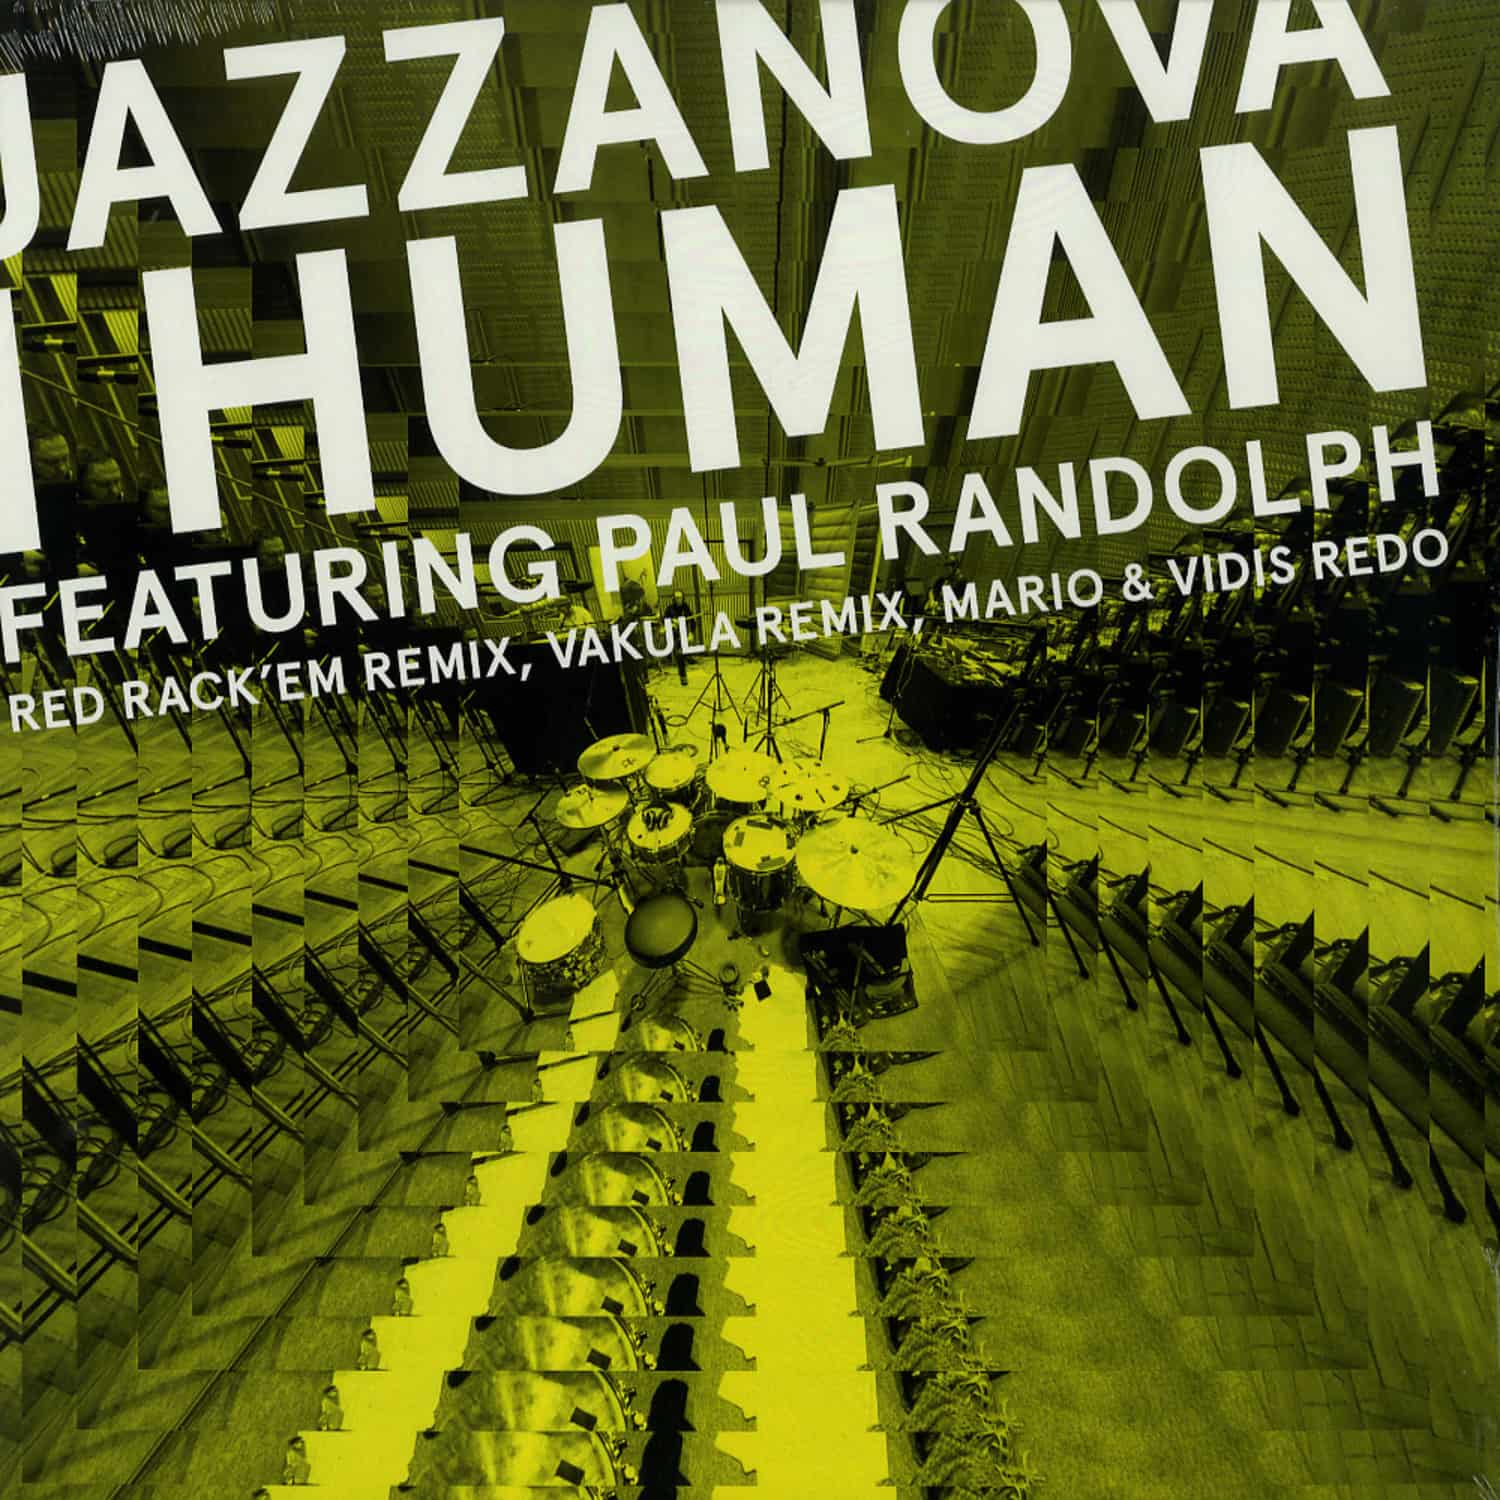 Jazzanova - I HUMAN - REMIXES 2